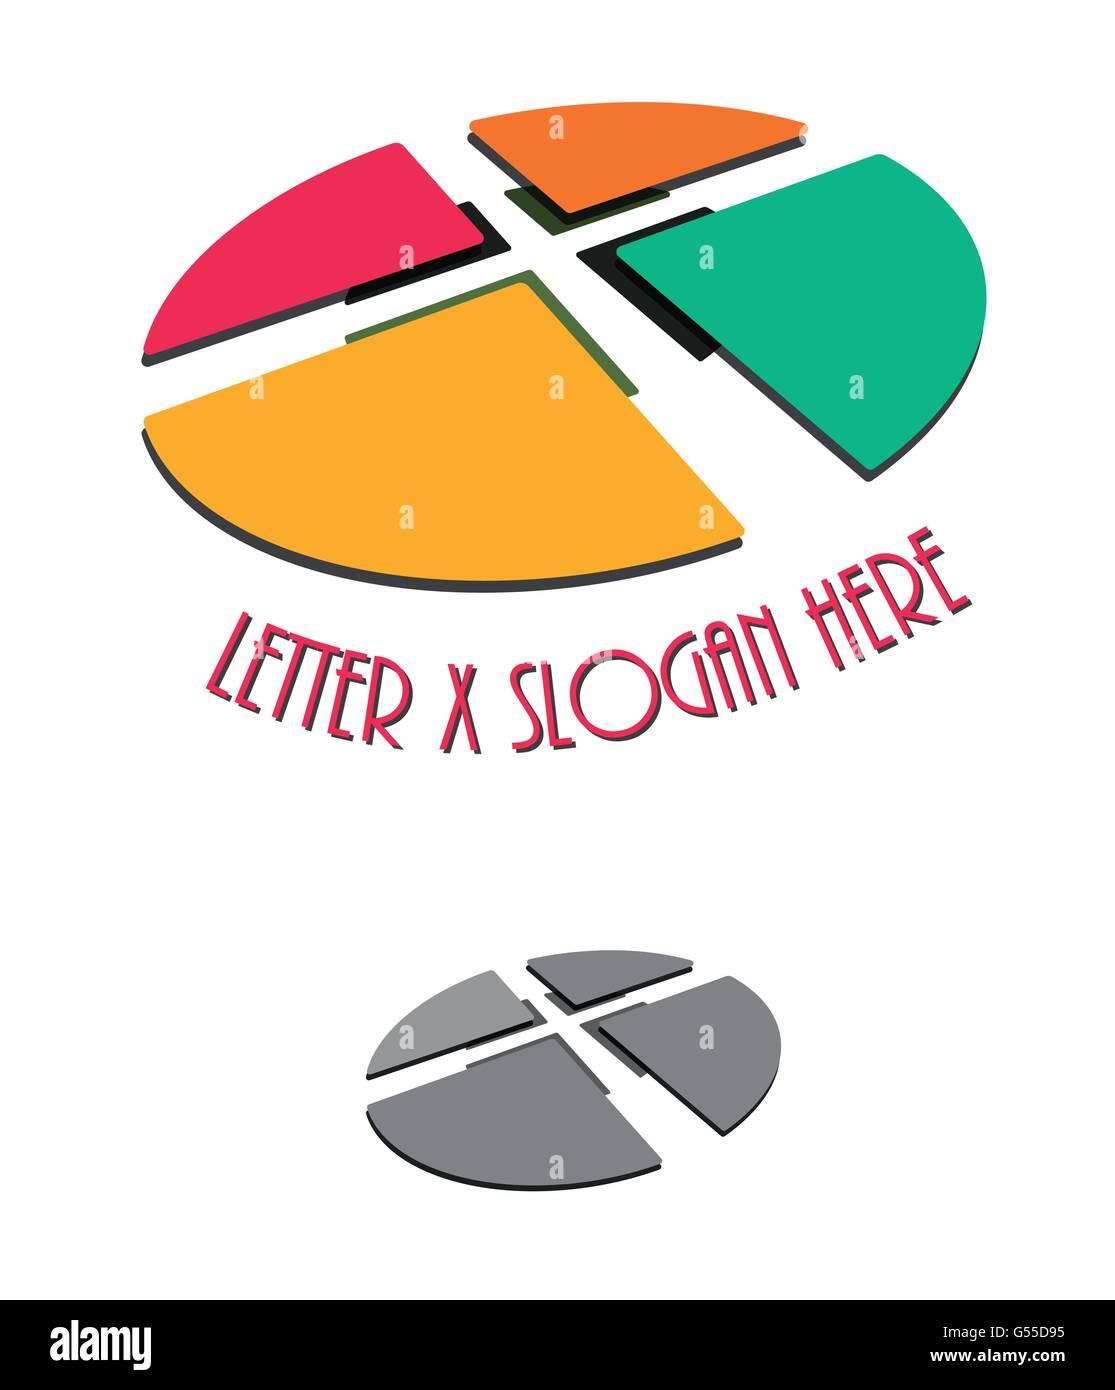 letter x symbol company identity logo vector design Stock Vector